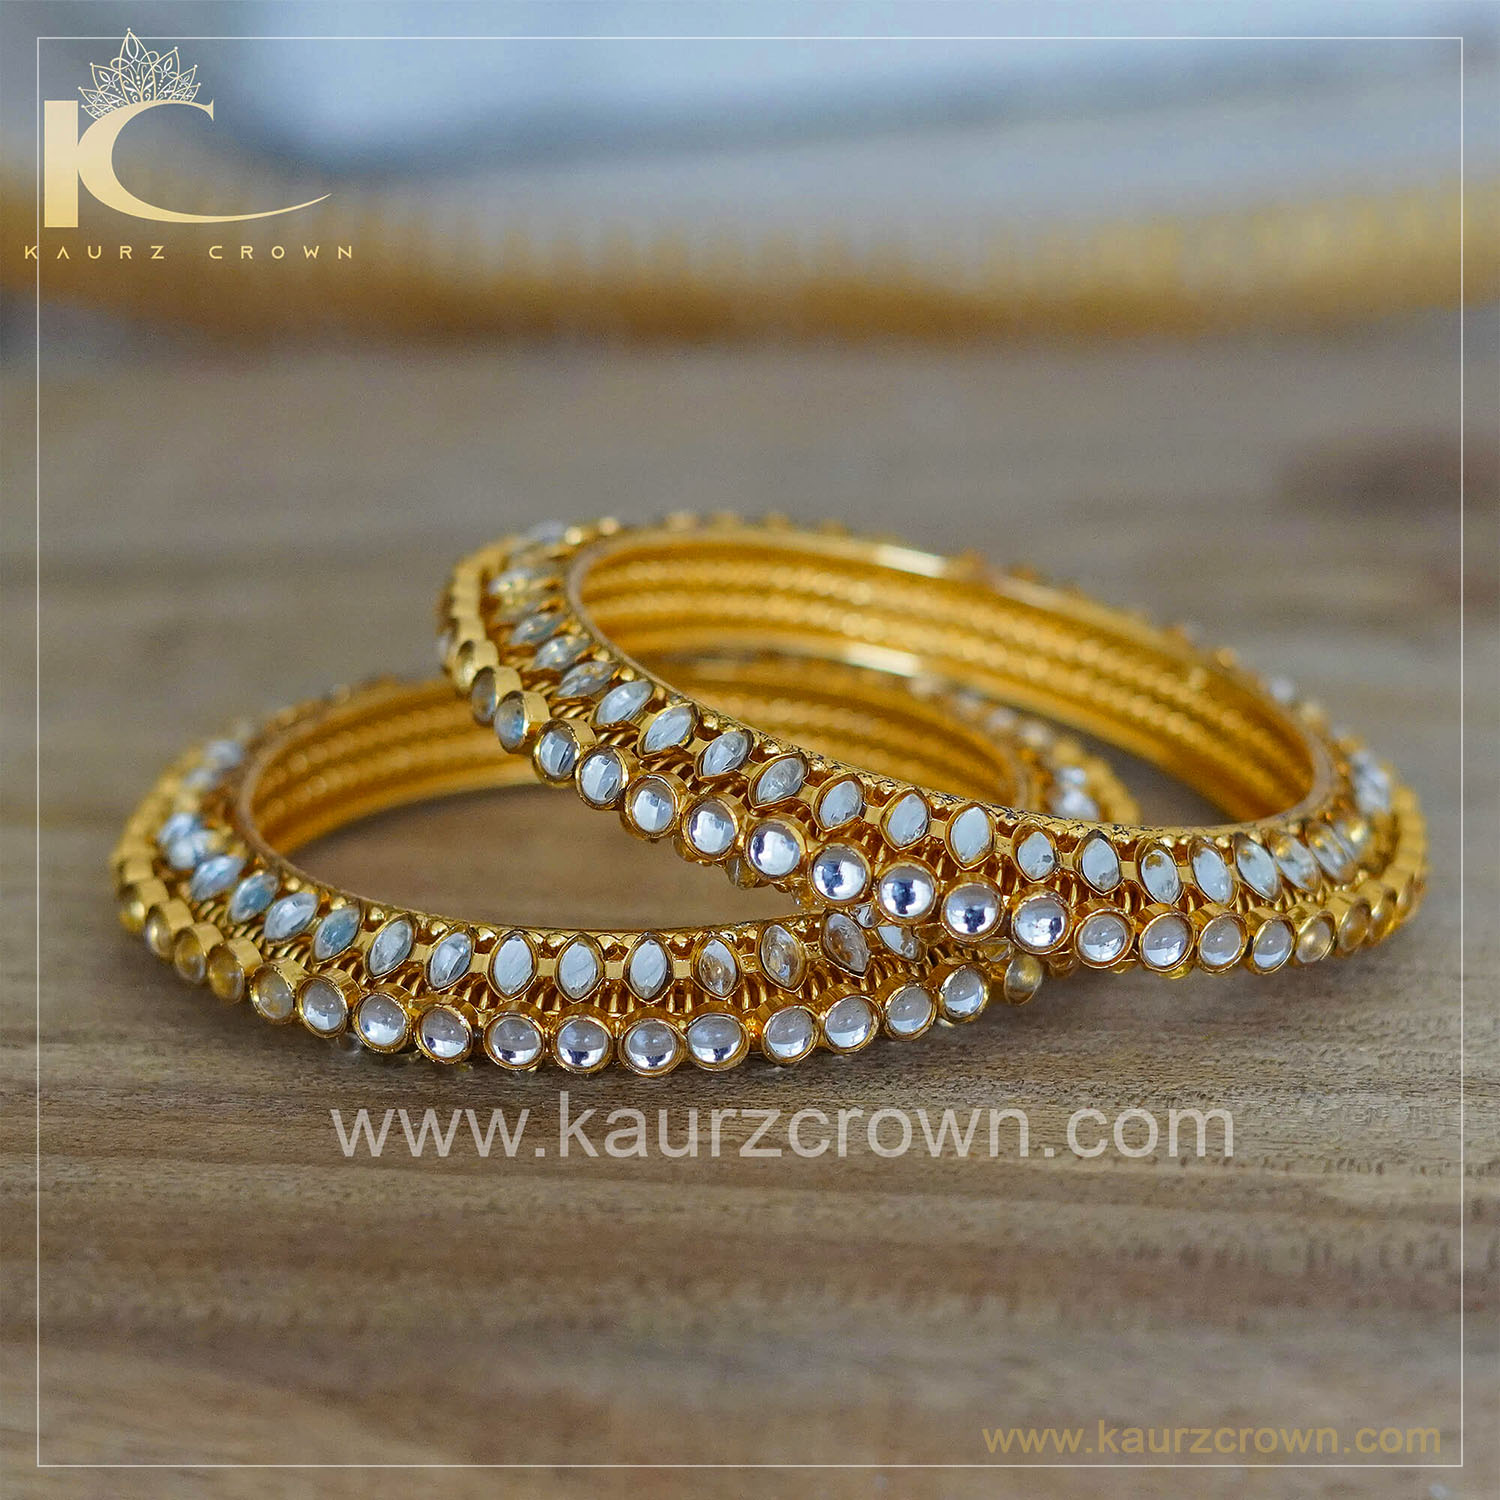 KaurzCrown.com – Finest Bespoke Jewellery